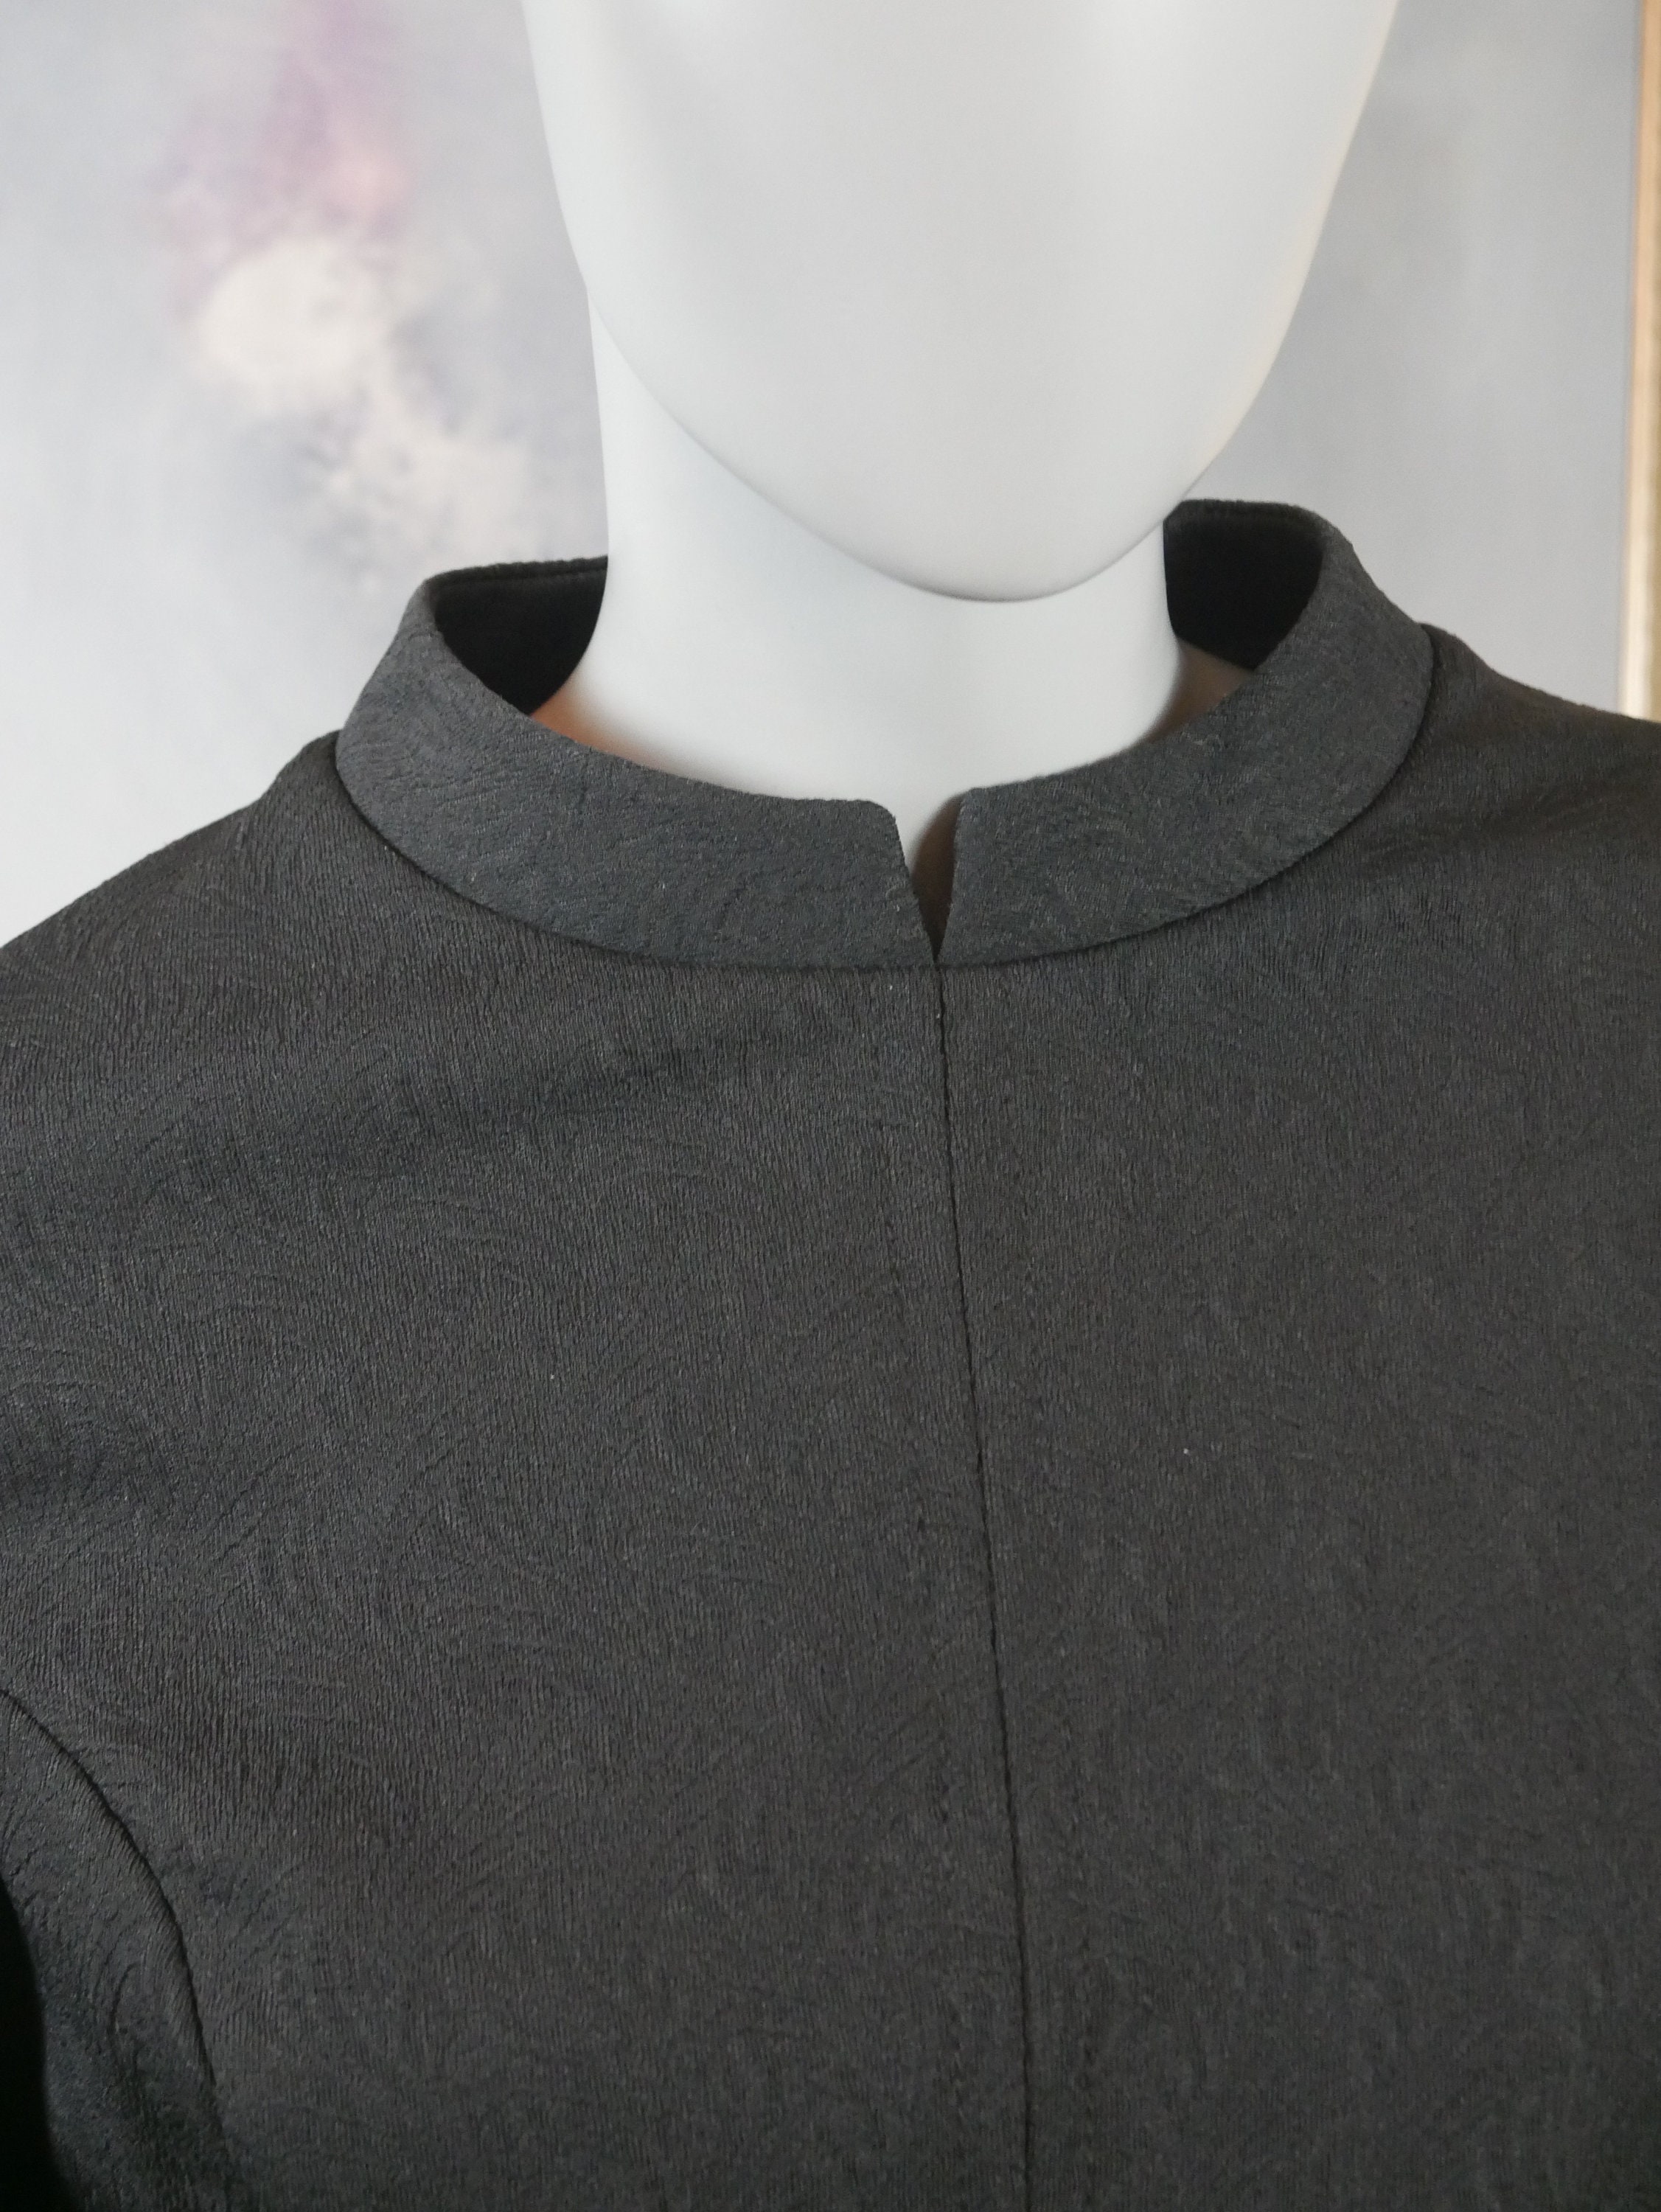 1960s Mod Black Dress European Vintage Long-sleeve | Etsy